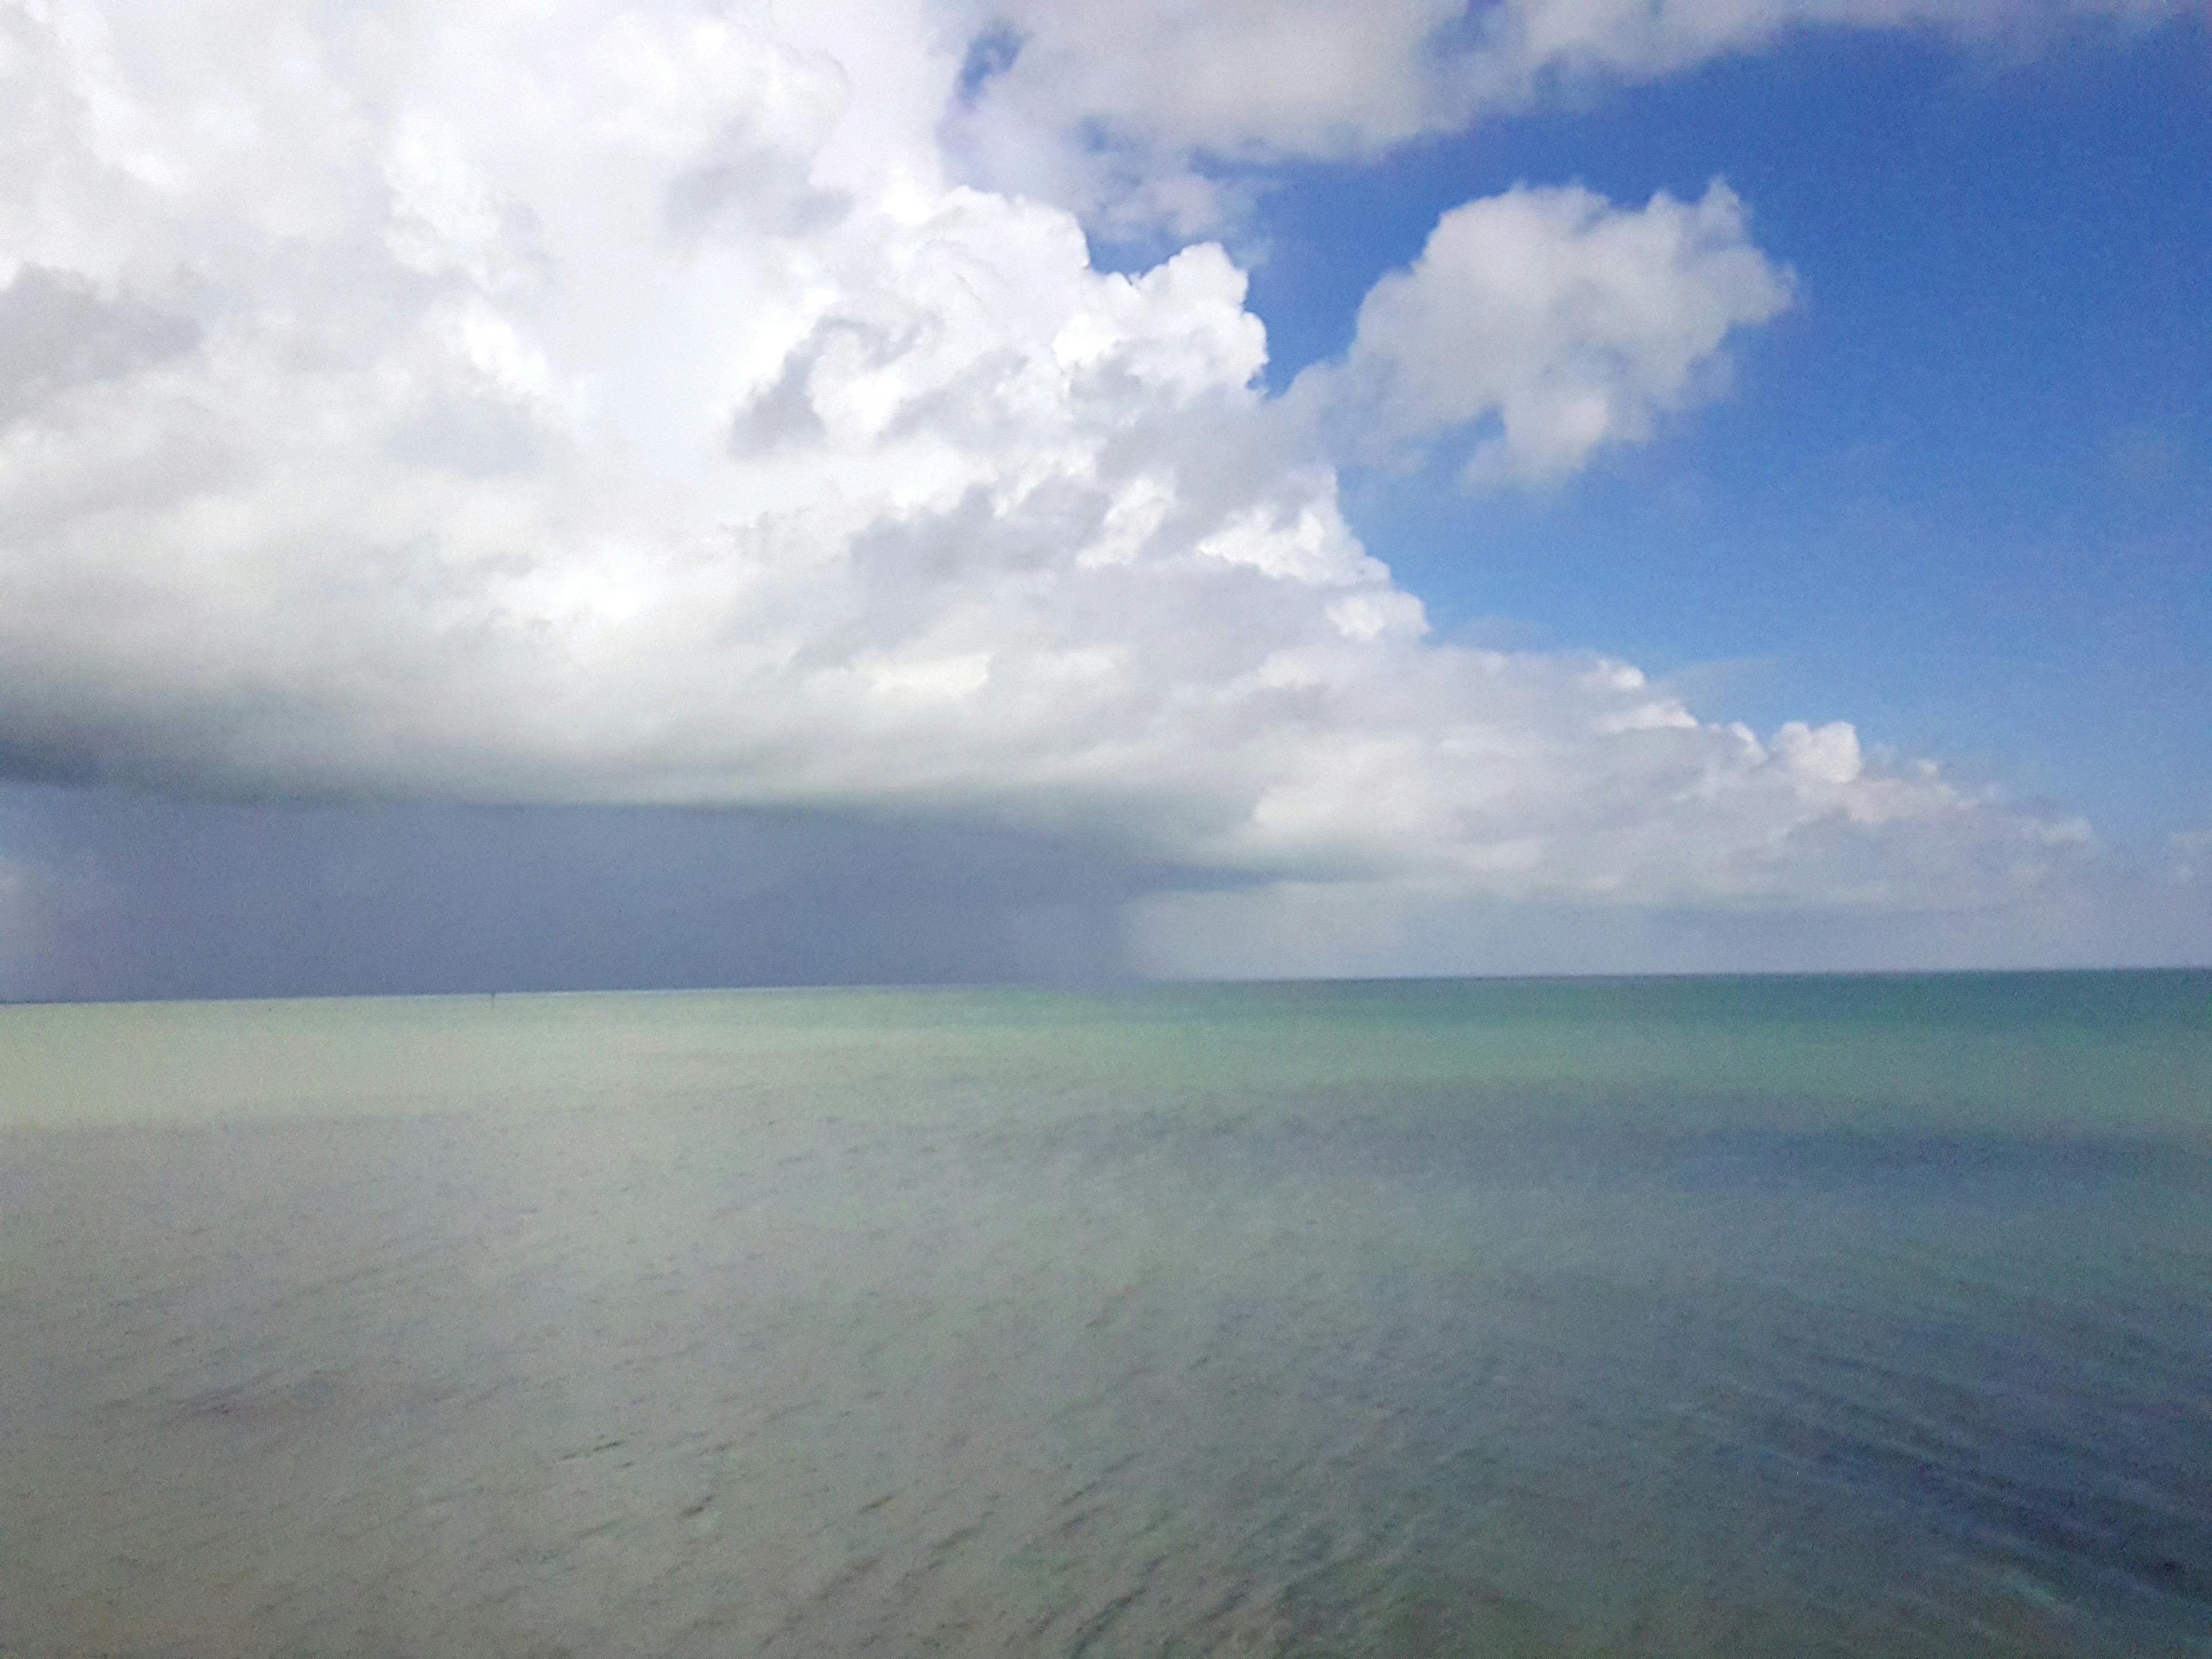 Free stock photo of clouds, ocean, rain